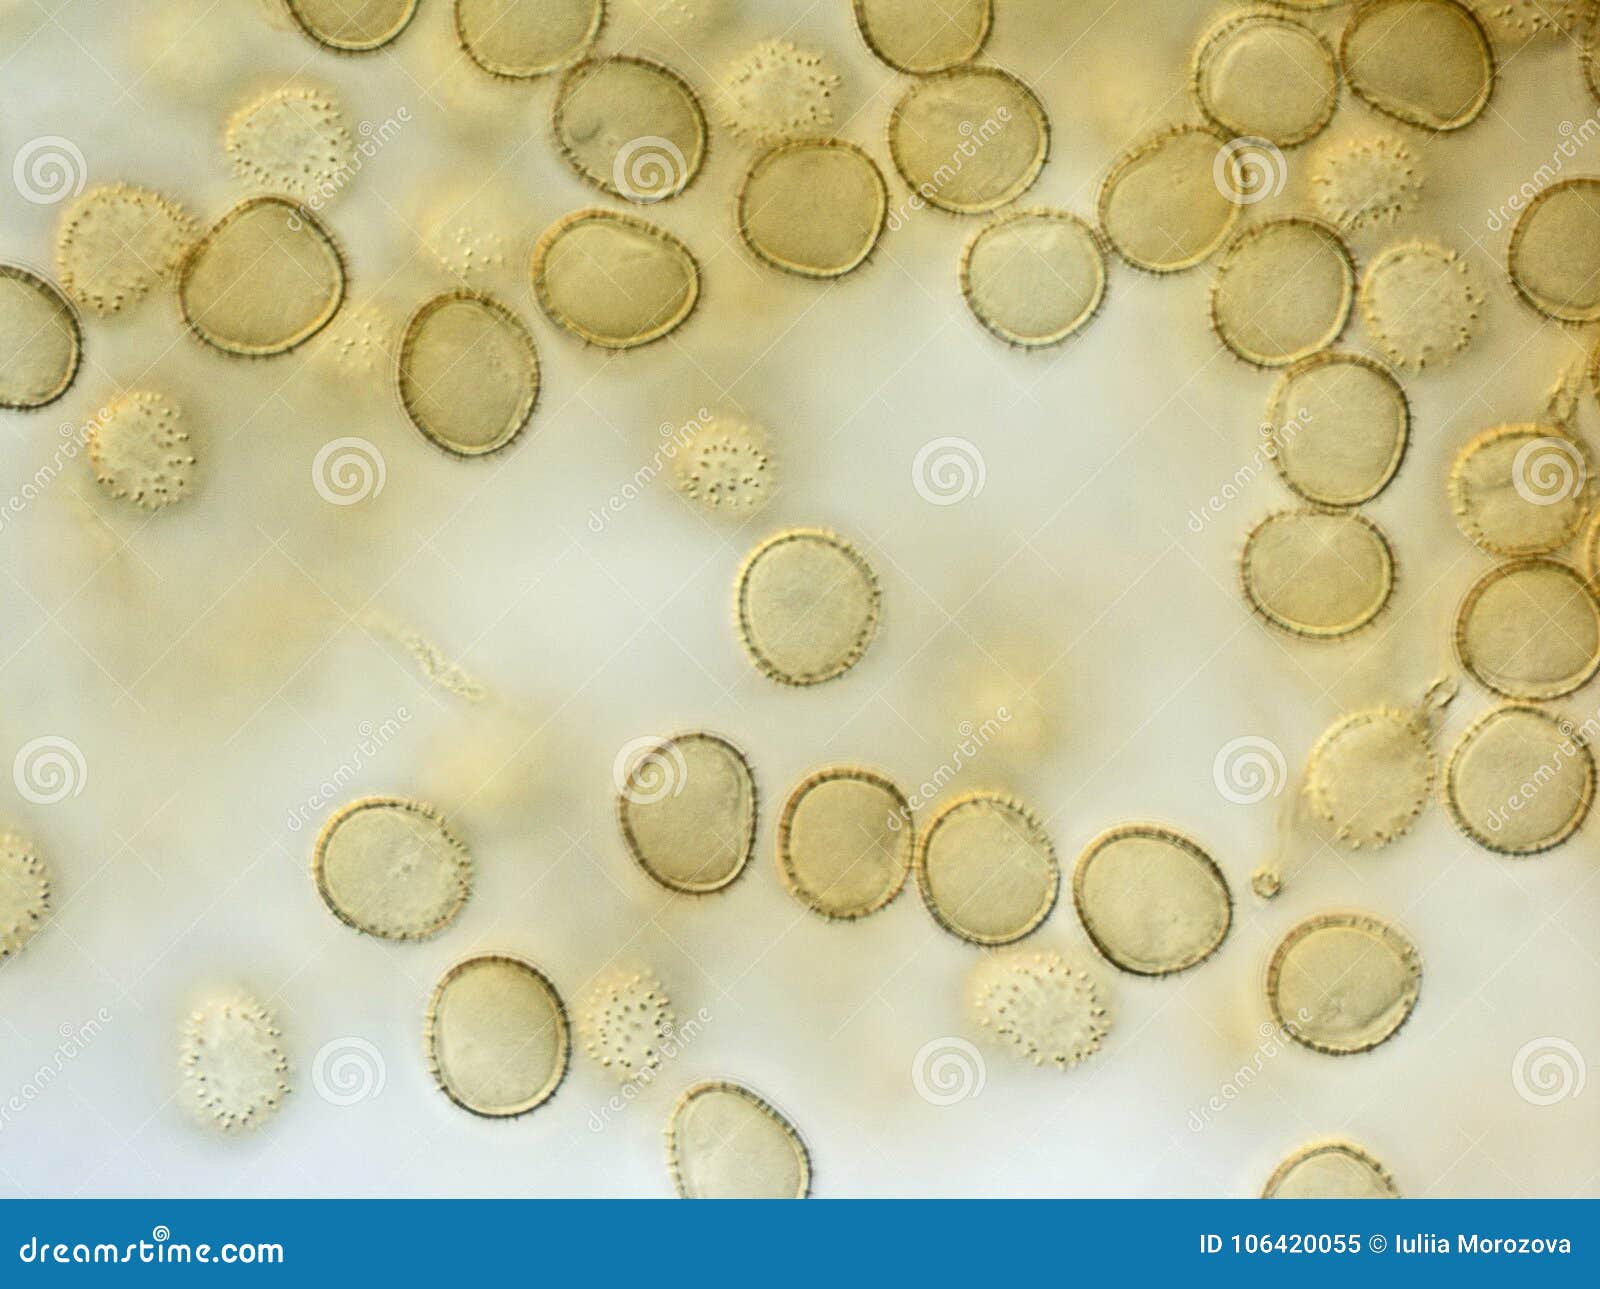 spores of a slime mold. microscopy